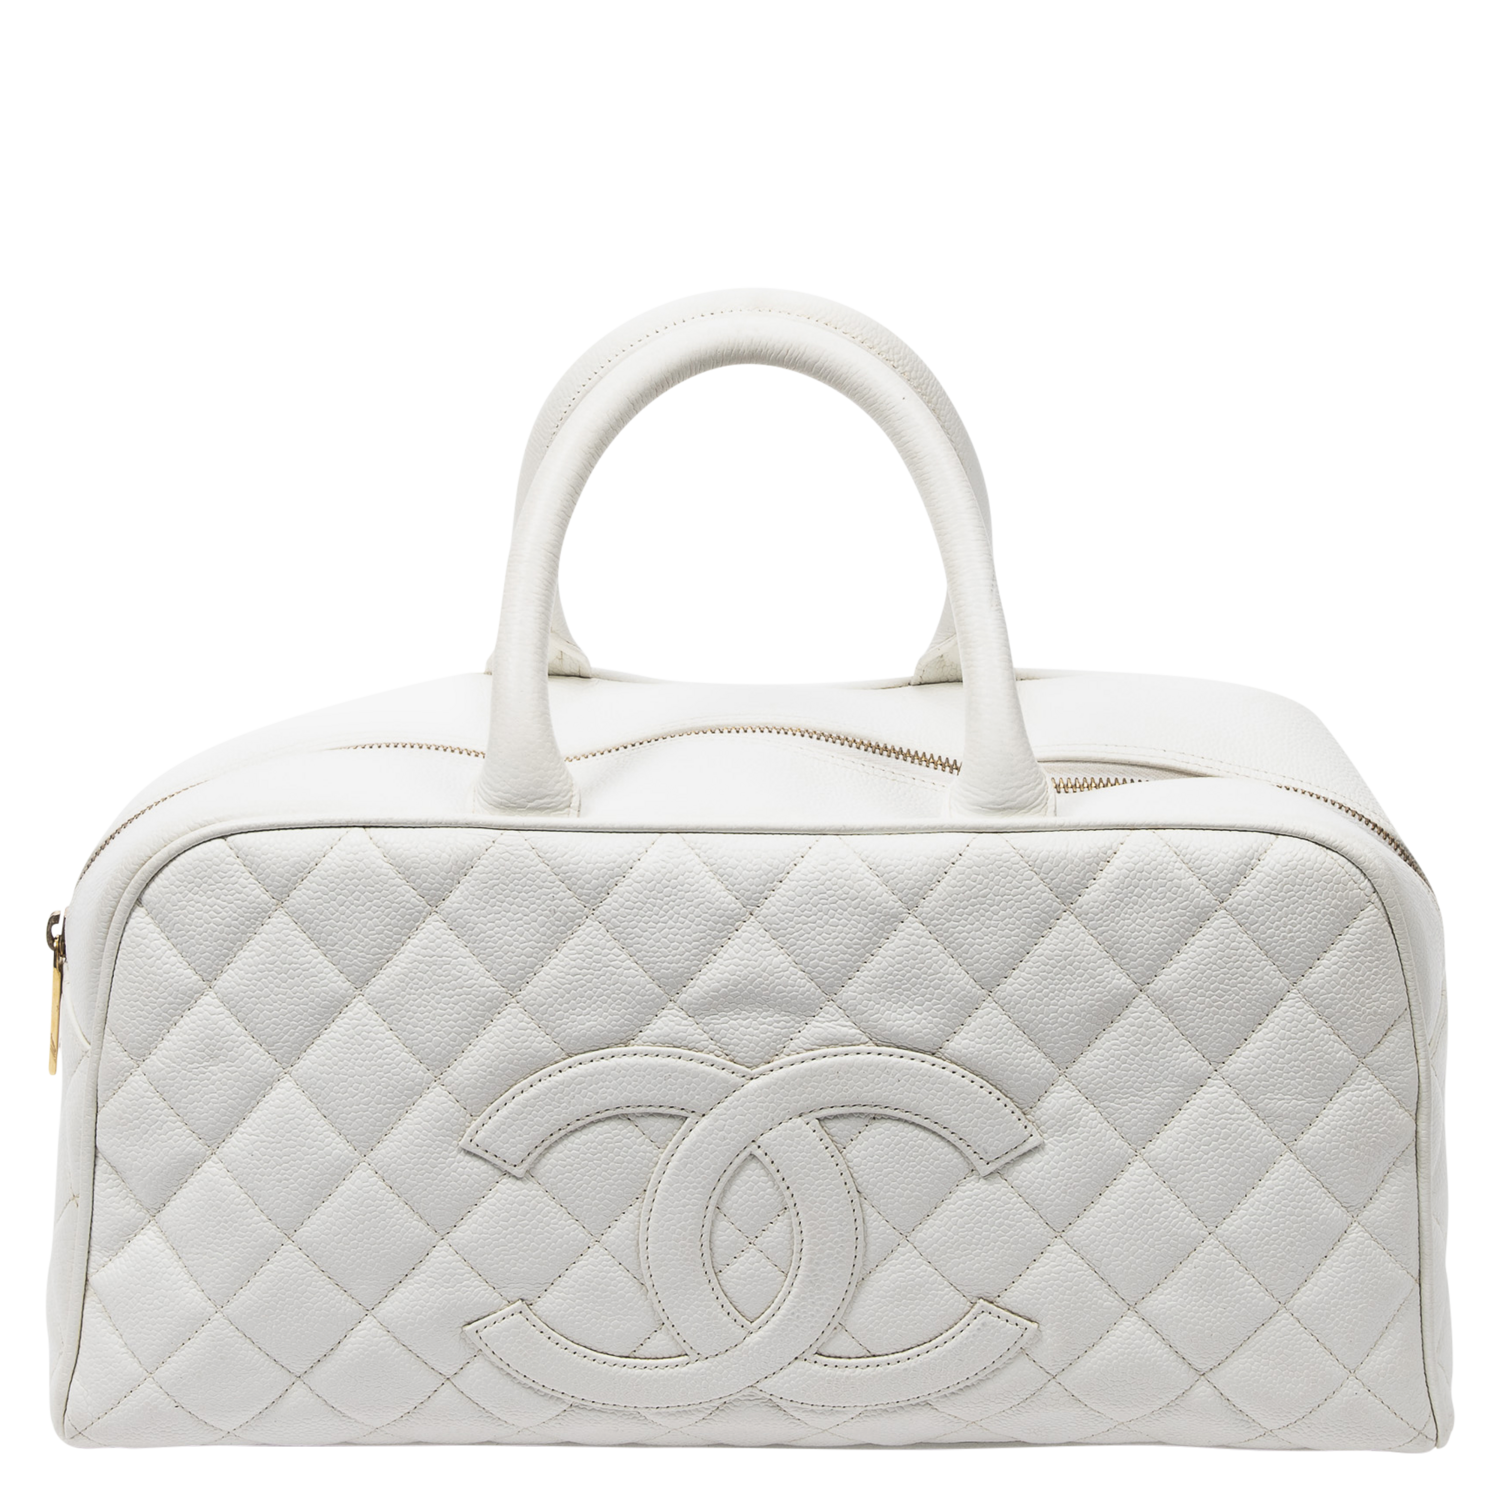 Chanel White 2003 CC Medium Top Handle Bag